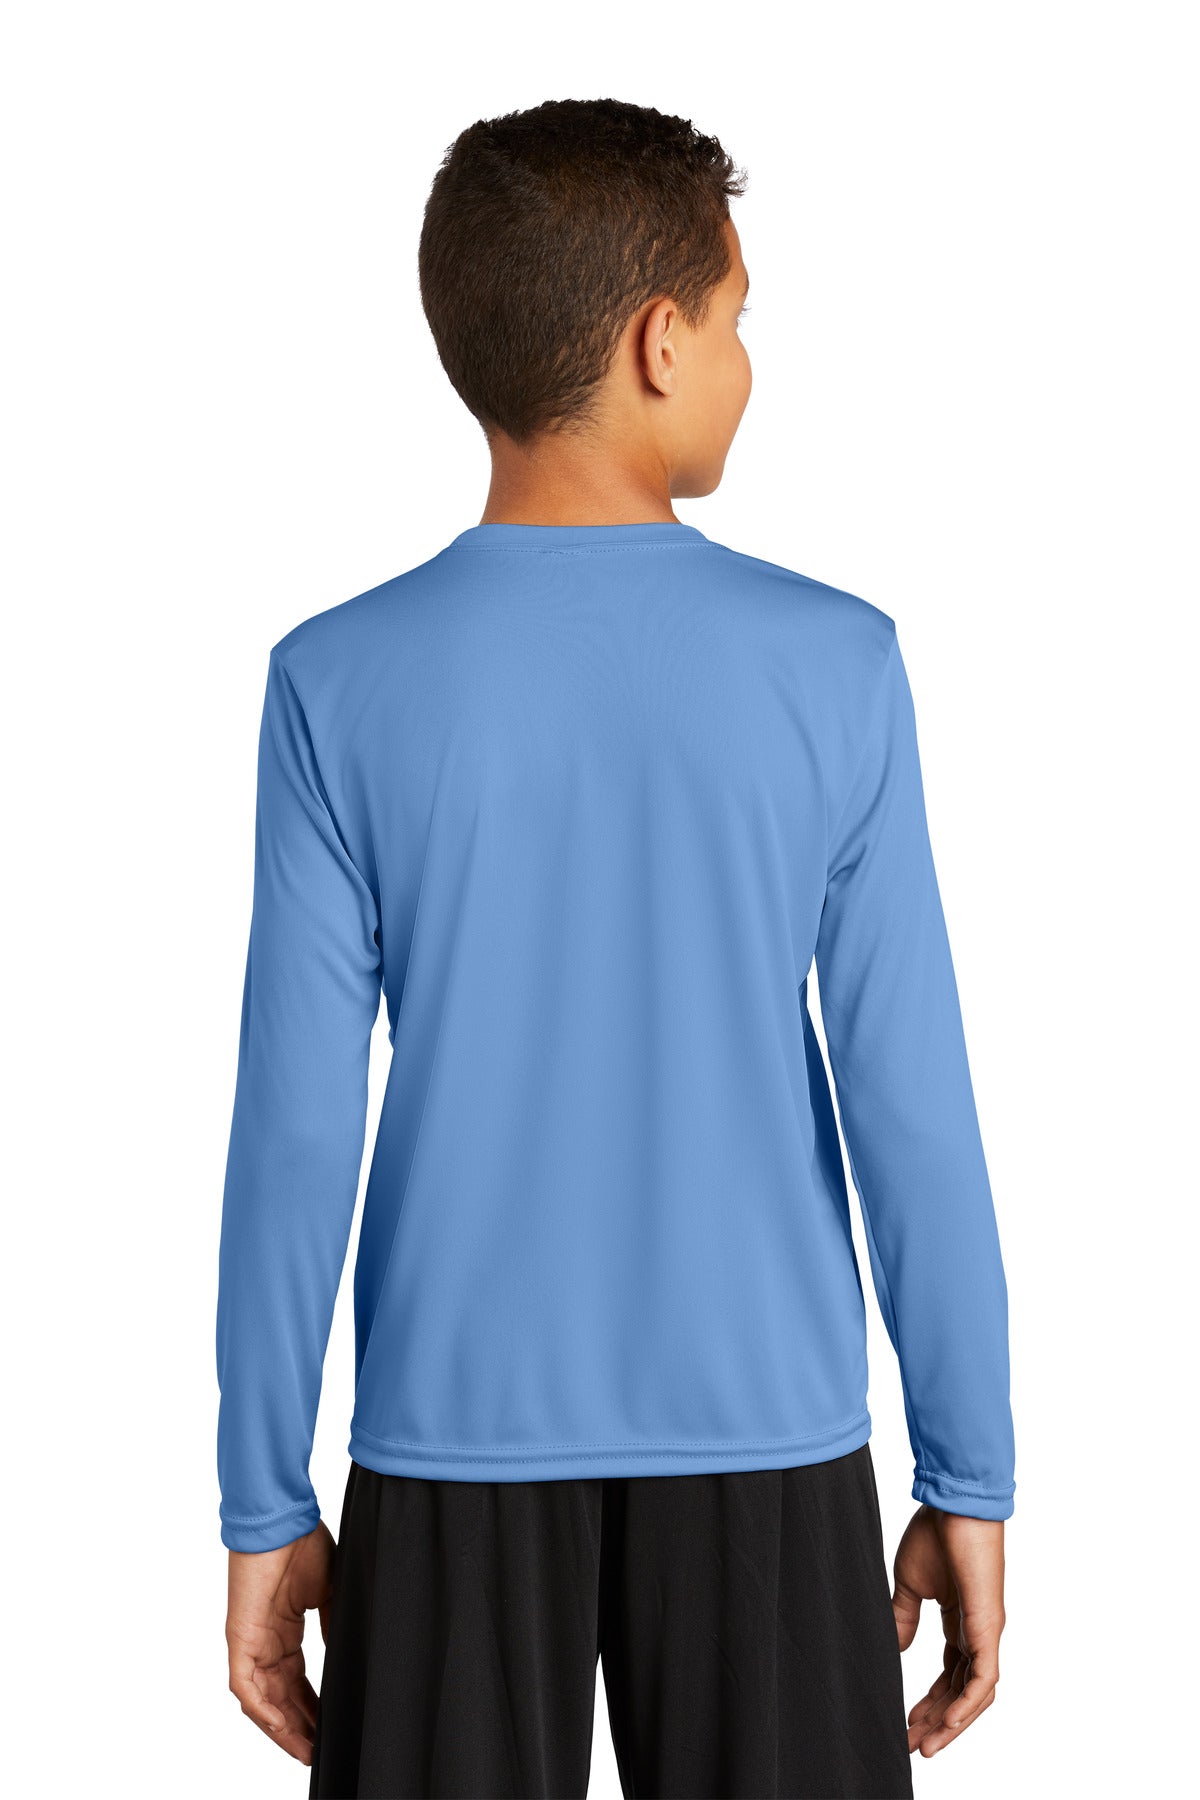 Sport-Tek® Youth Long Sleeve PosiCharge® Competitor™ Tee. YST350LS [Carolina Blue]